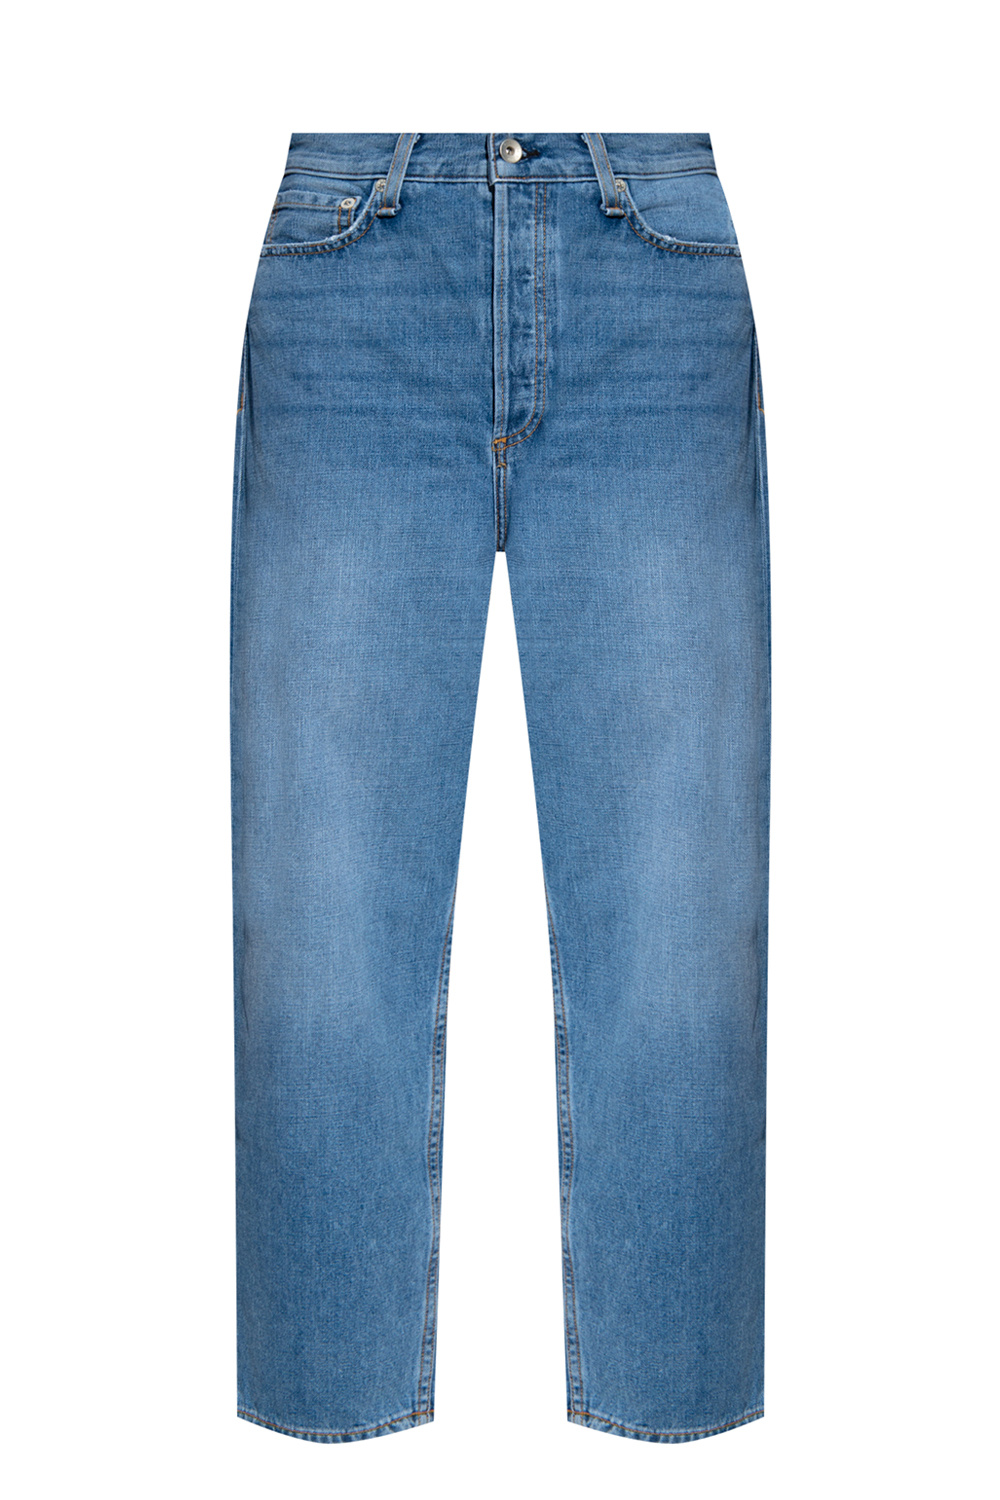 utility pleated waist shirt dress  Distressed jeans